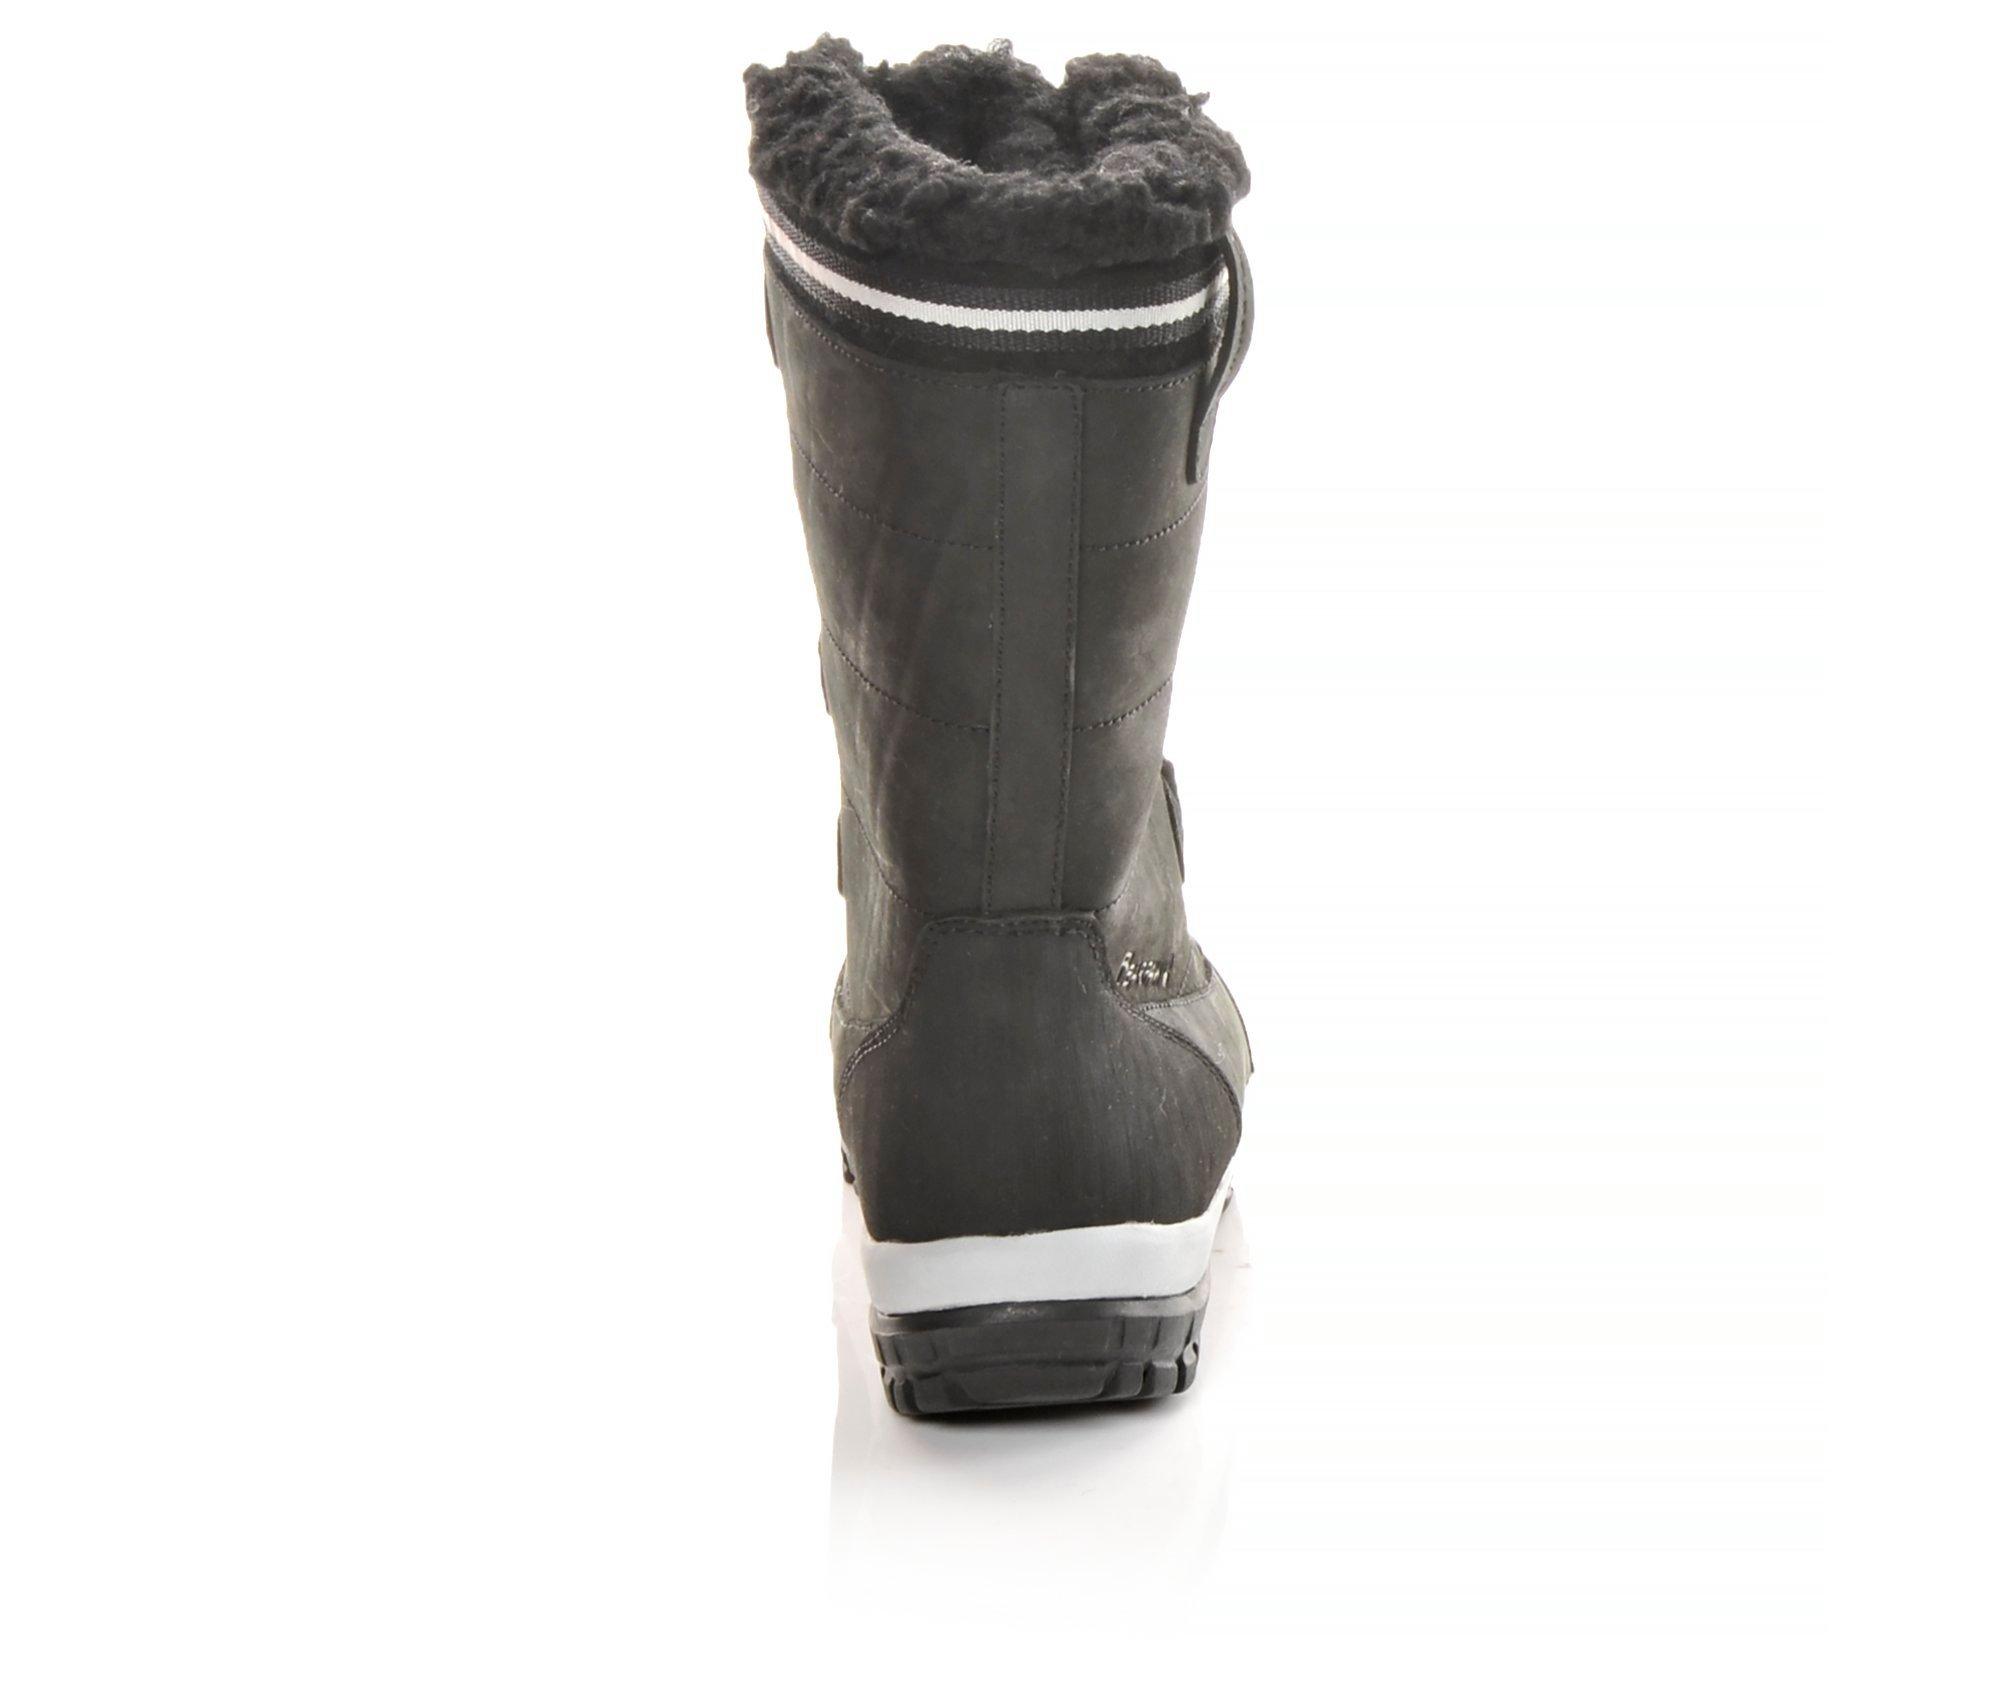 Women's Bearpaw Desdemona Waterproof Winter Boots